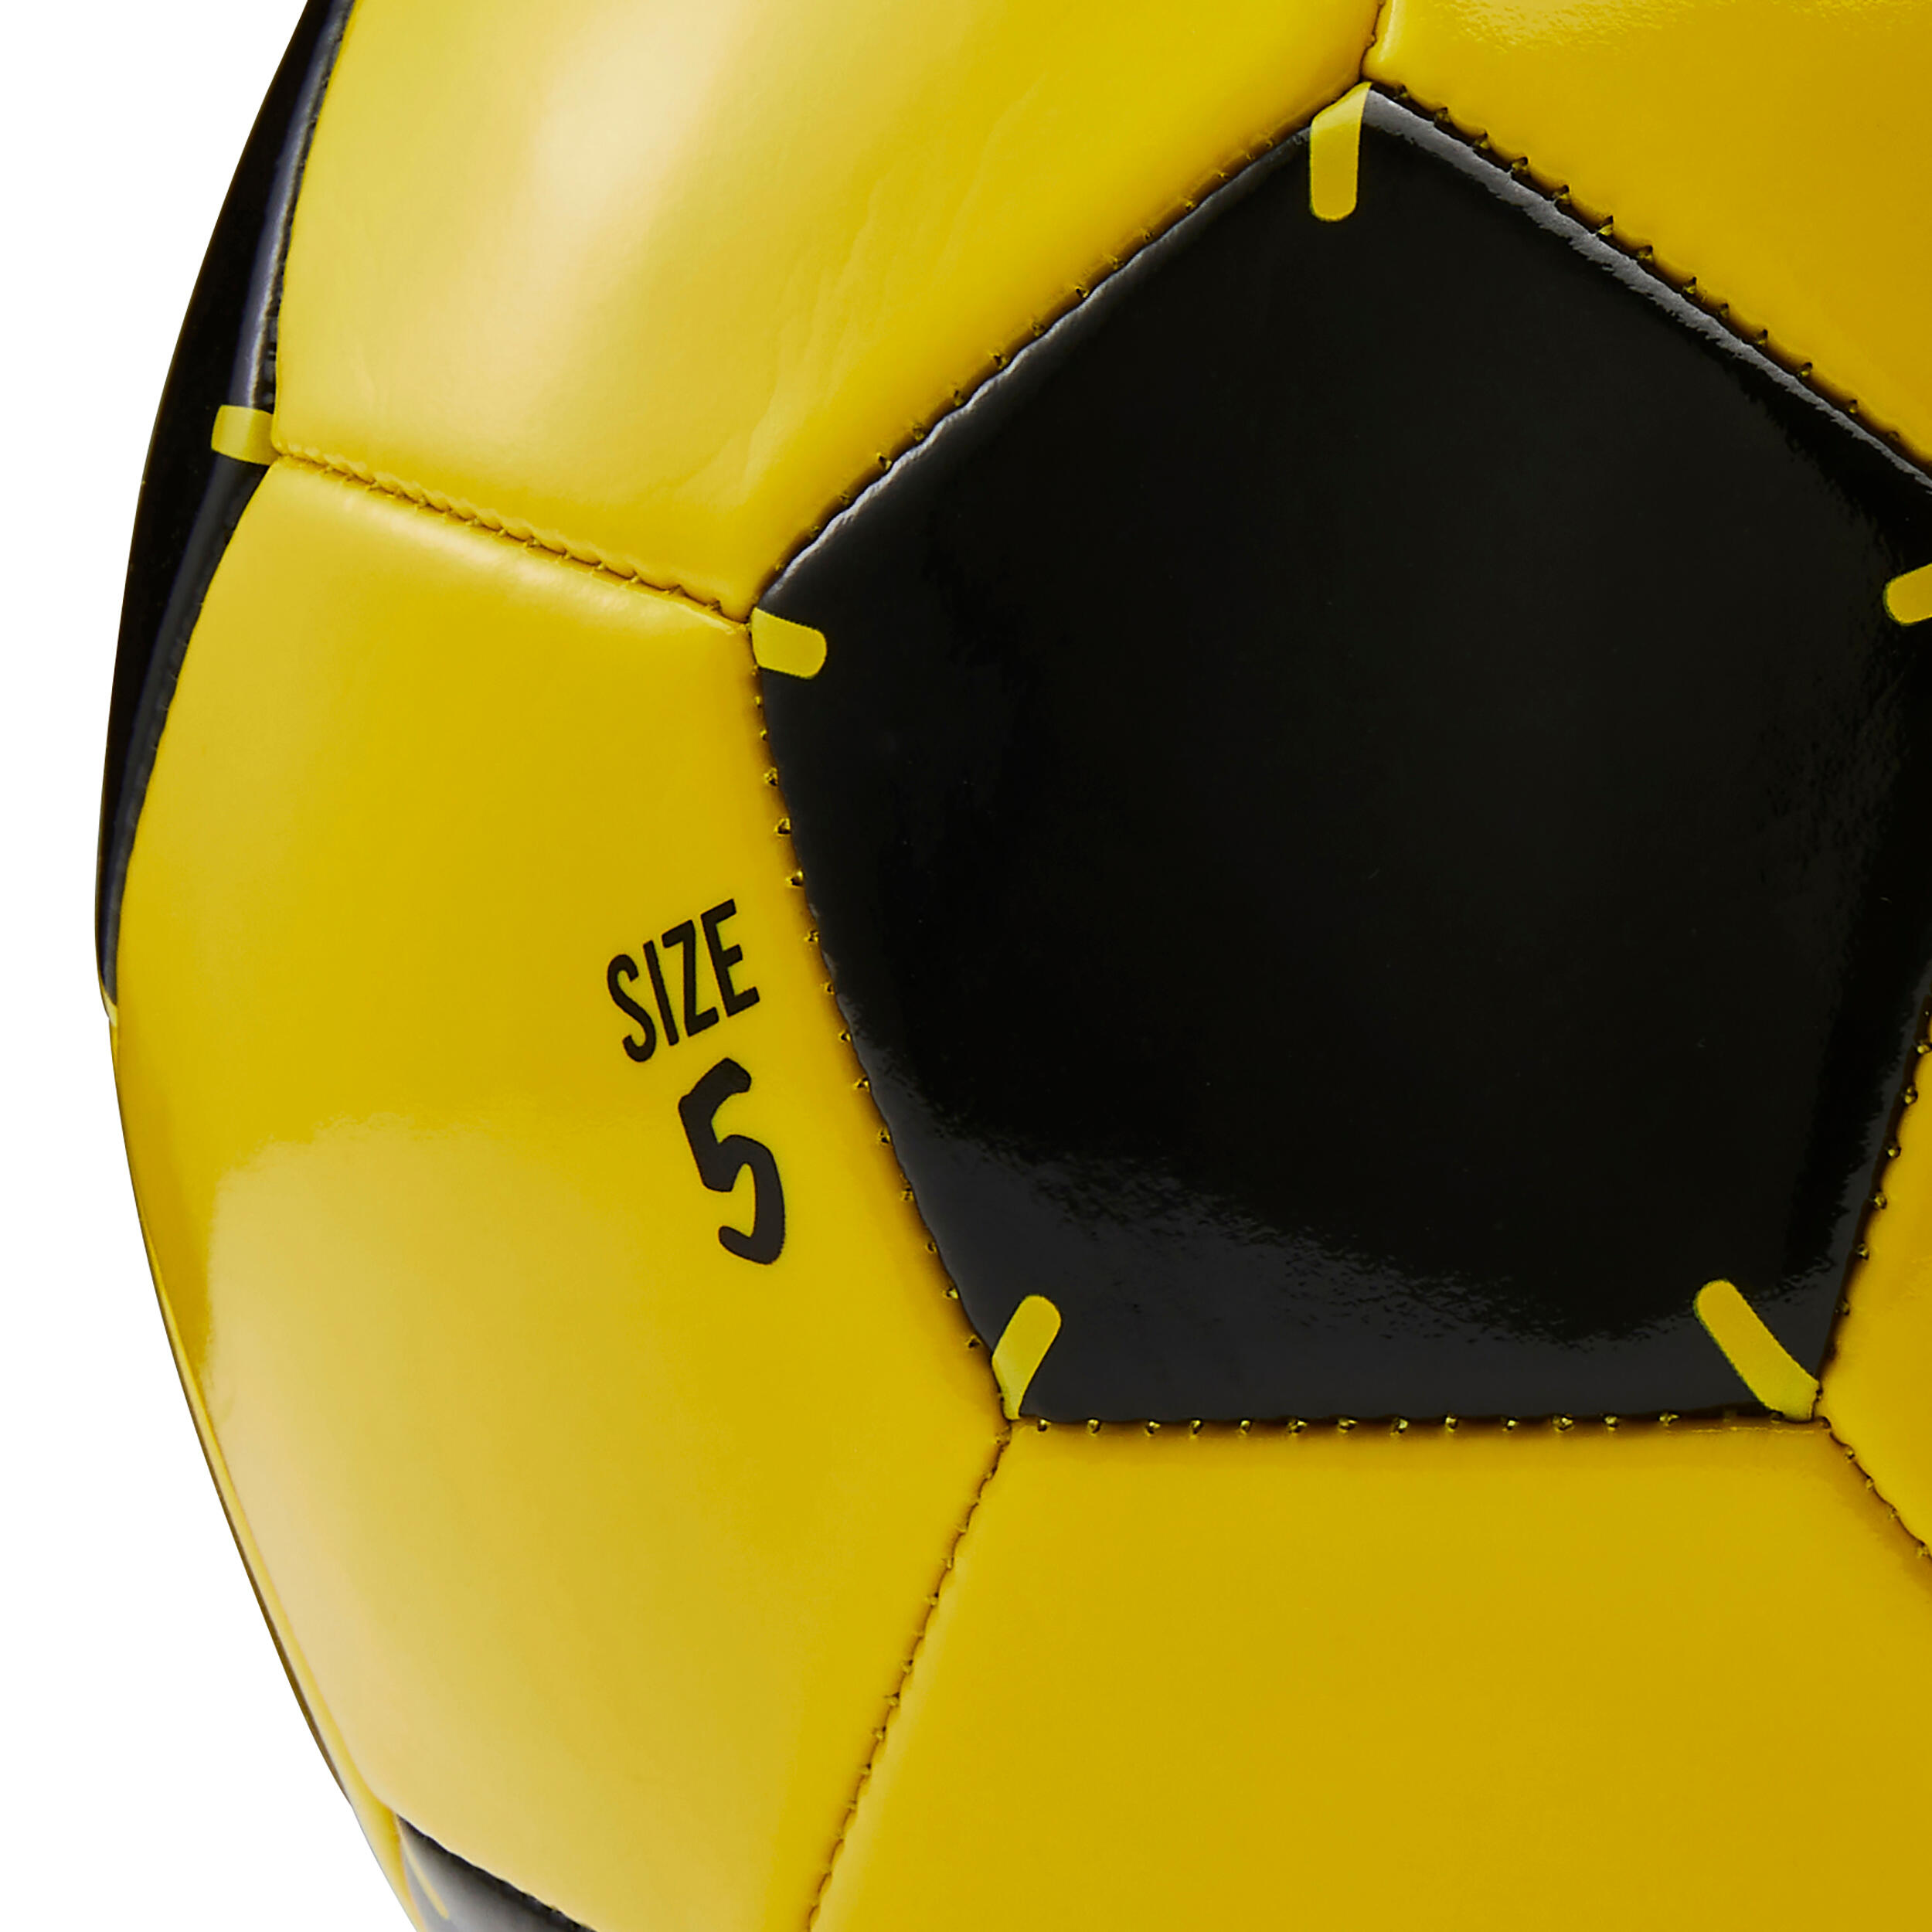 Kids' Size 5 Soccer Ball - First Kick Yellow - KIPSTA